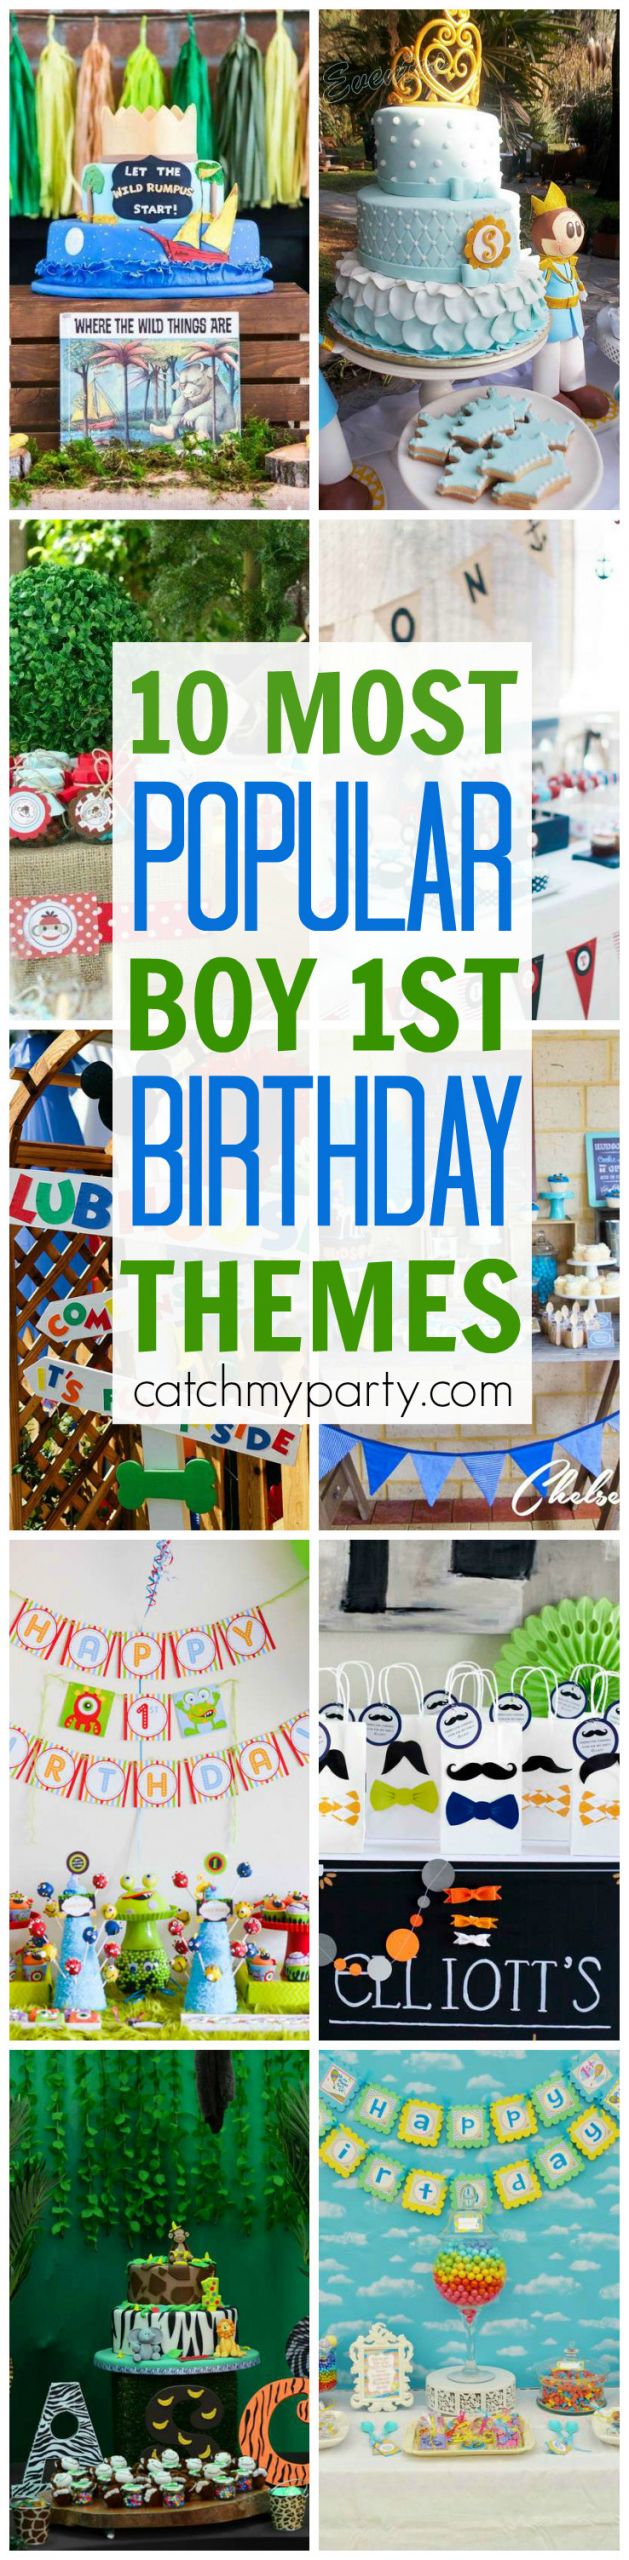 Boy 1st Birthday Party Ideas
 10 Most Popular Boy 1st Birthday Party Themes